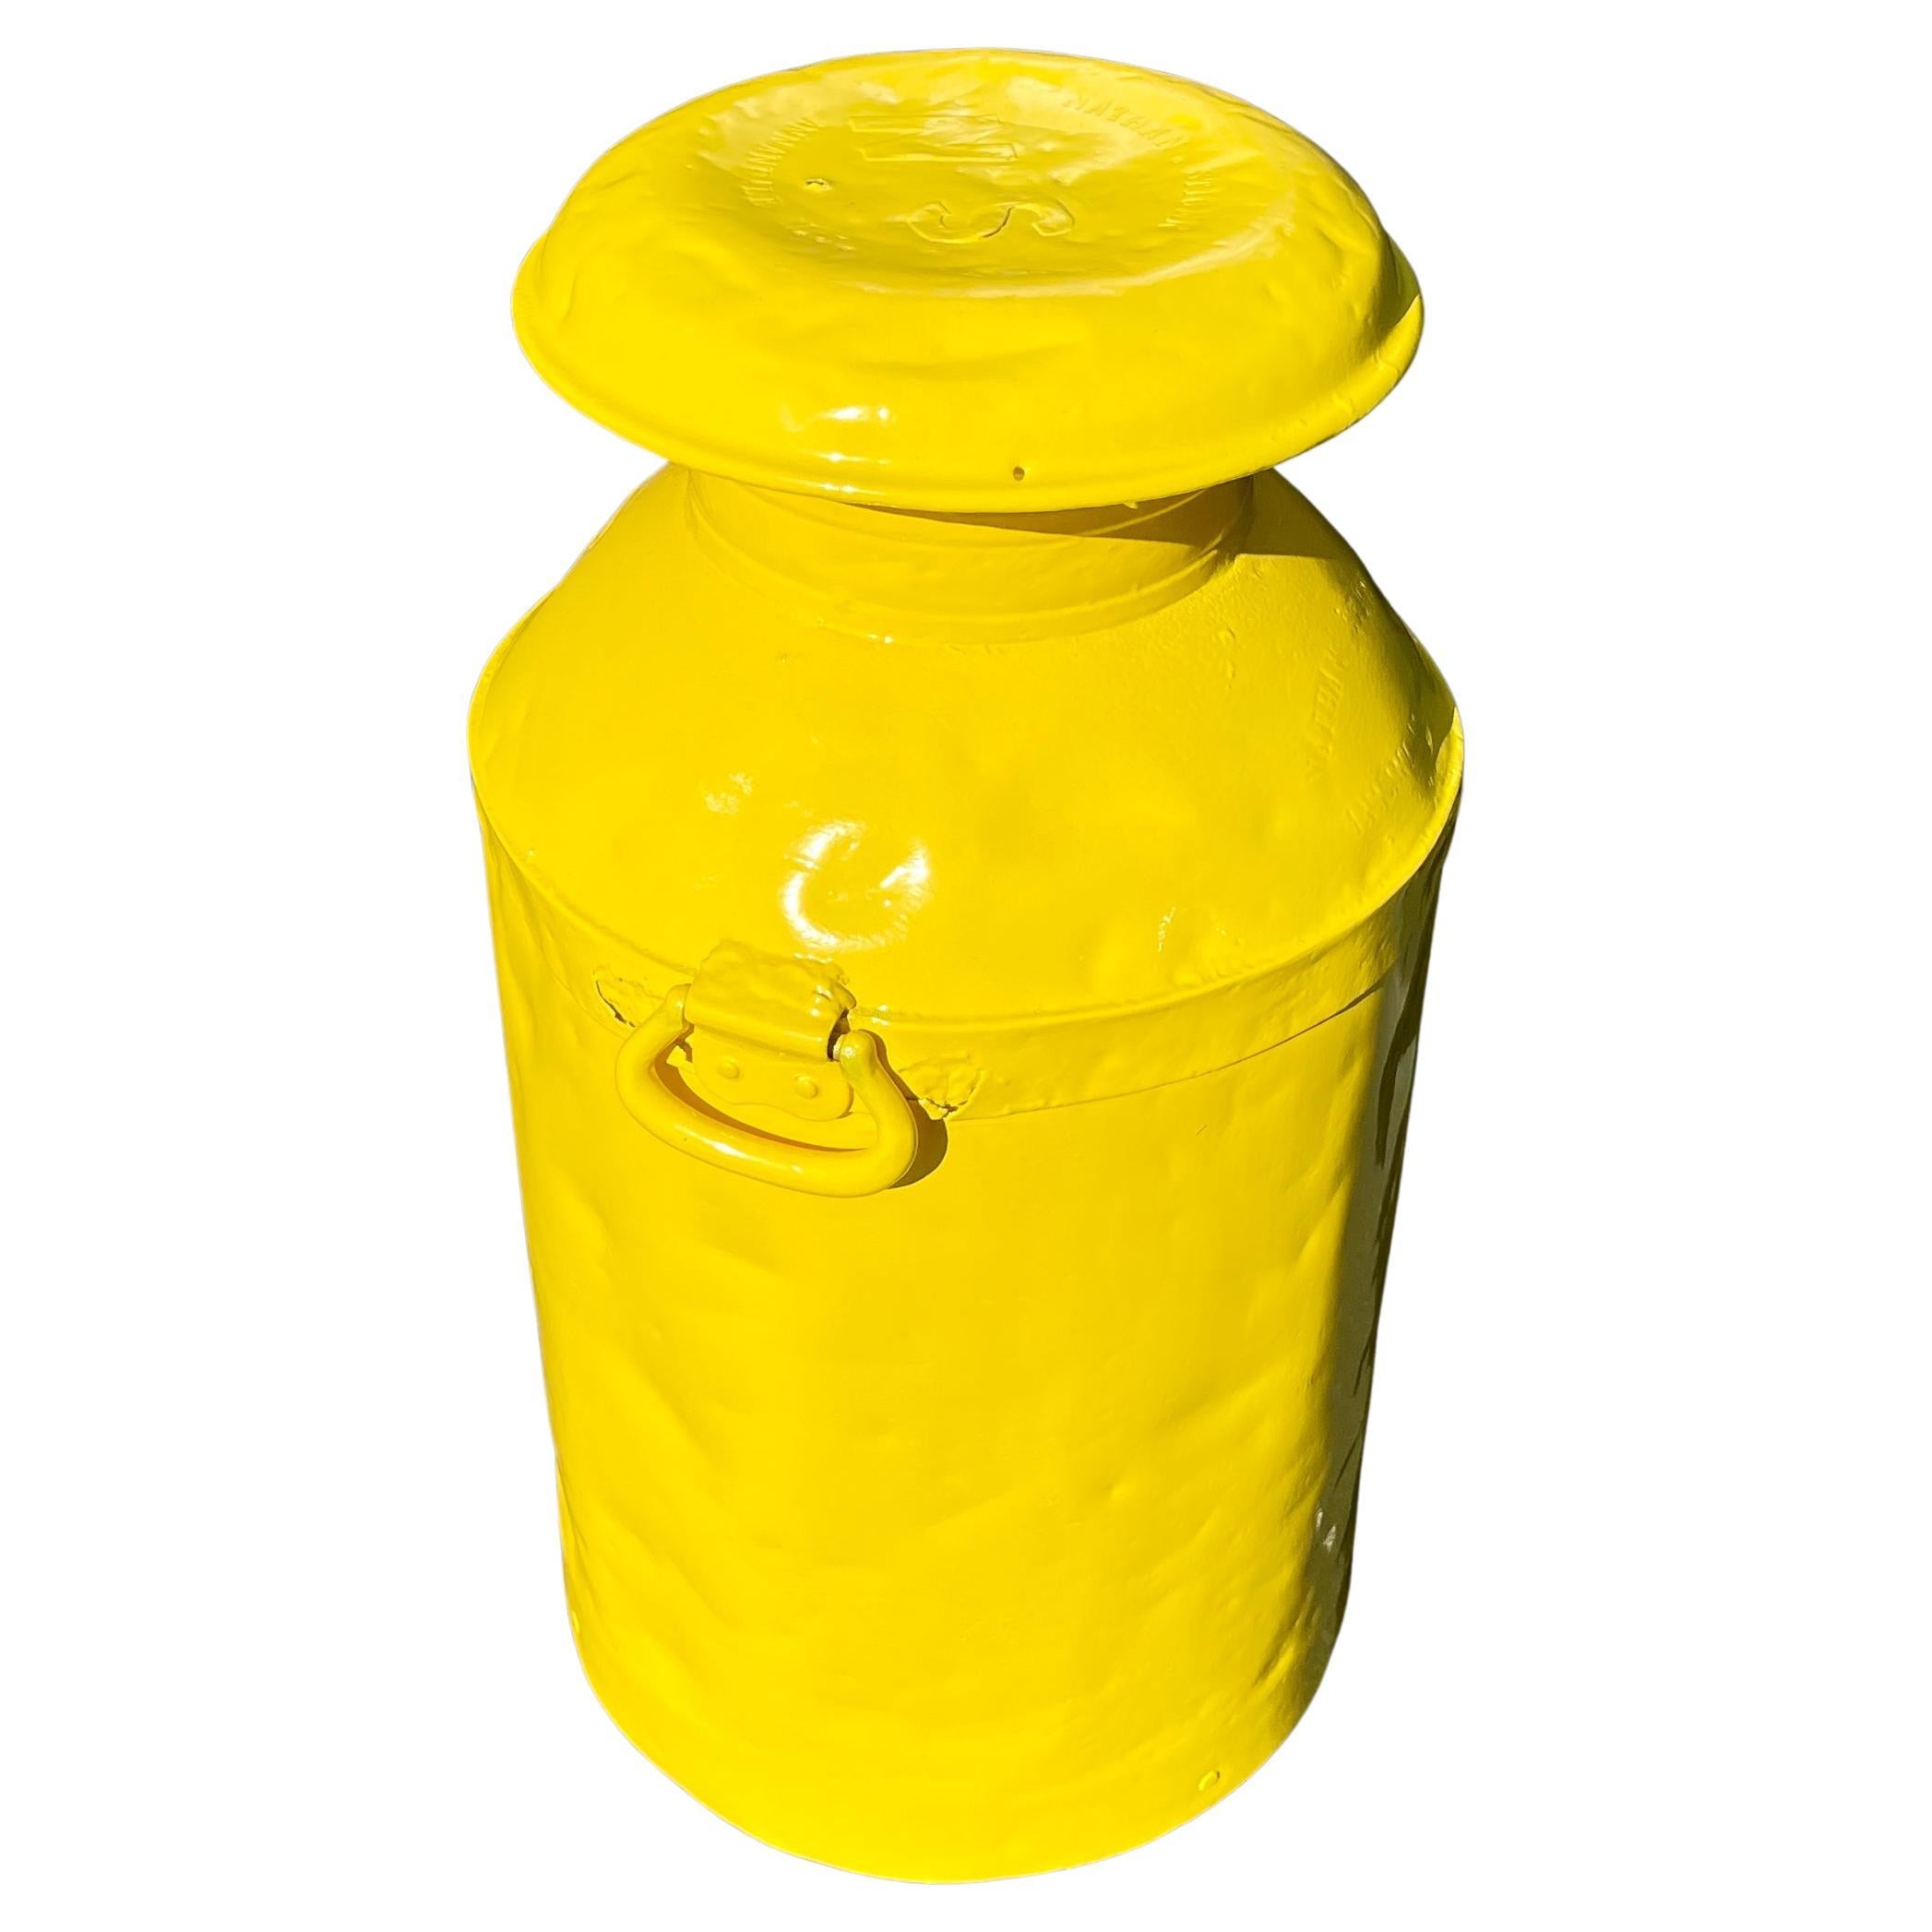 Vintage Metal Milk Jug Side Table, Powder Coated Yellow, Bright Sunshine